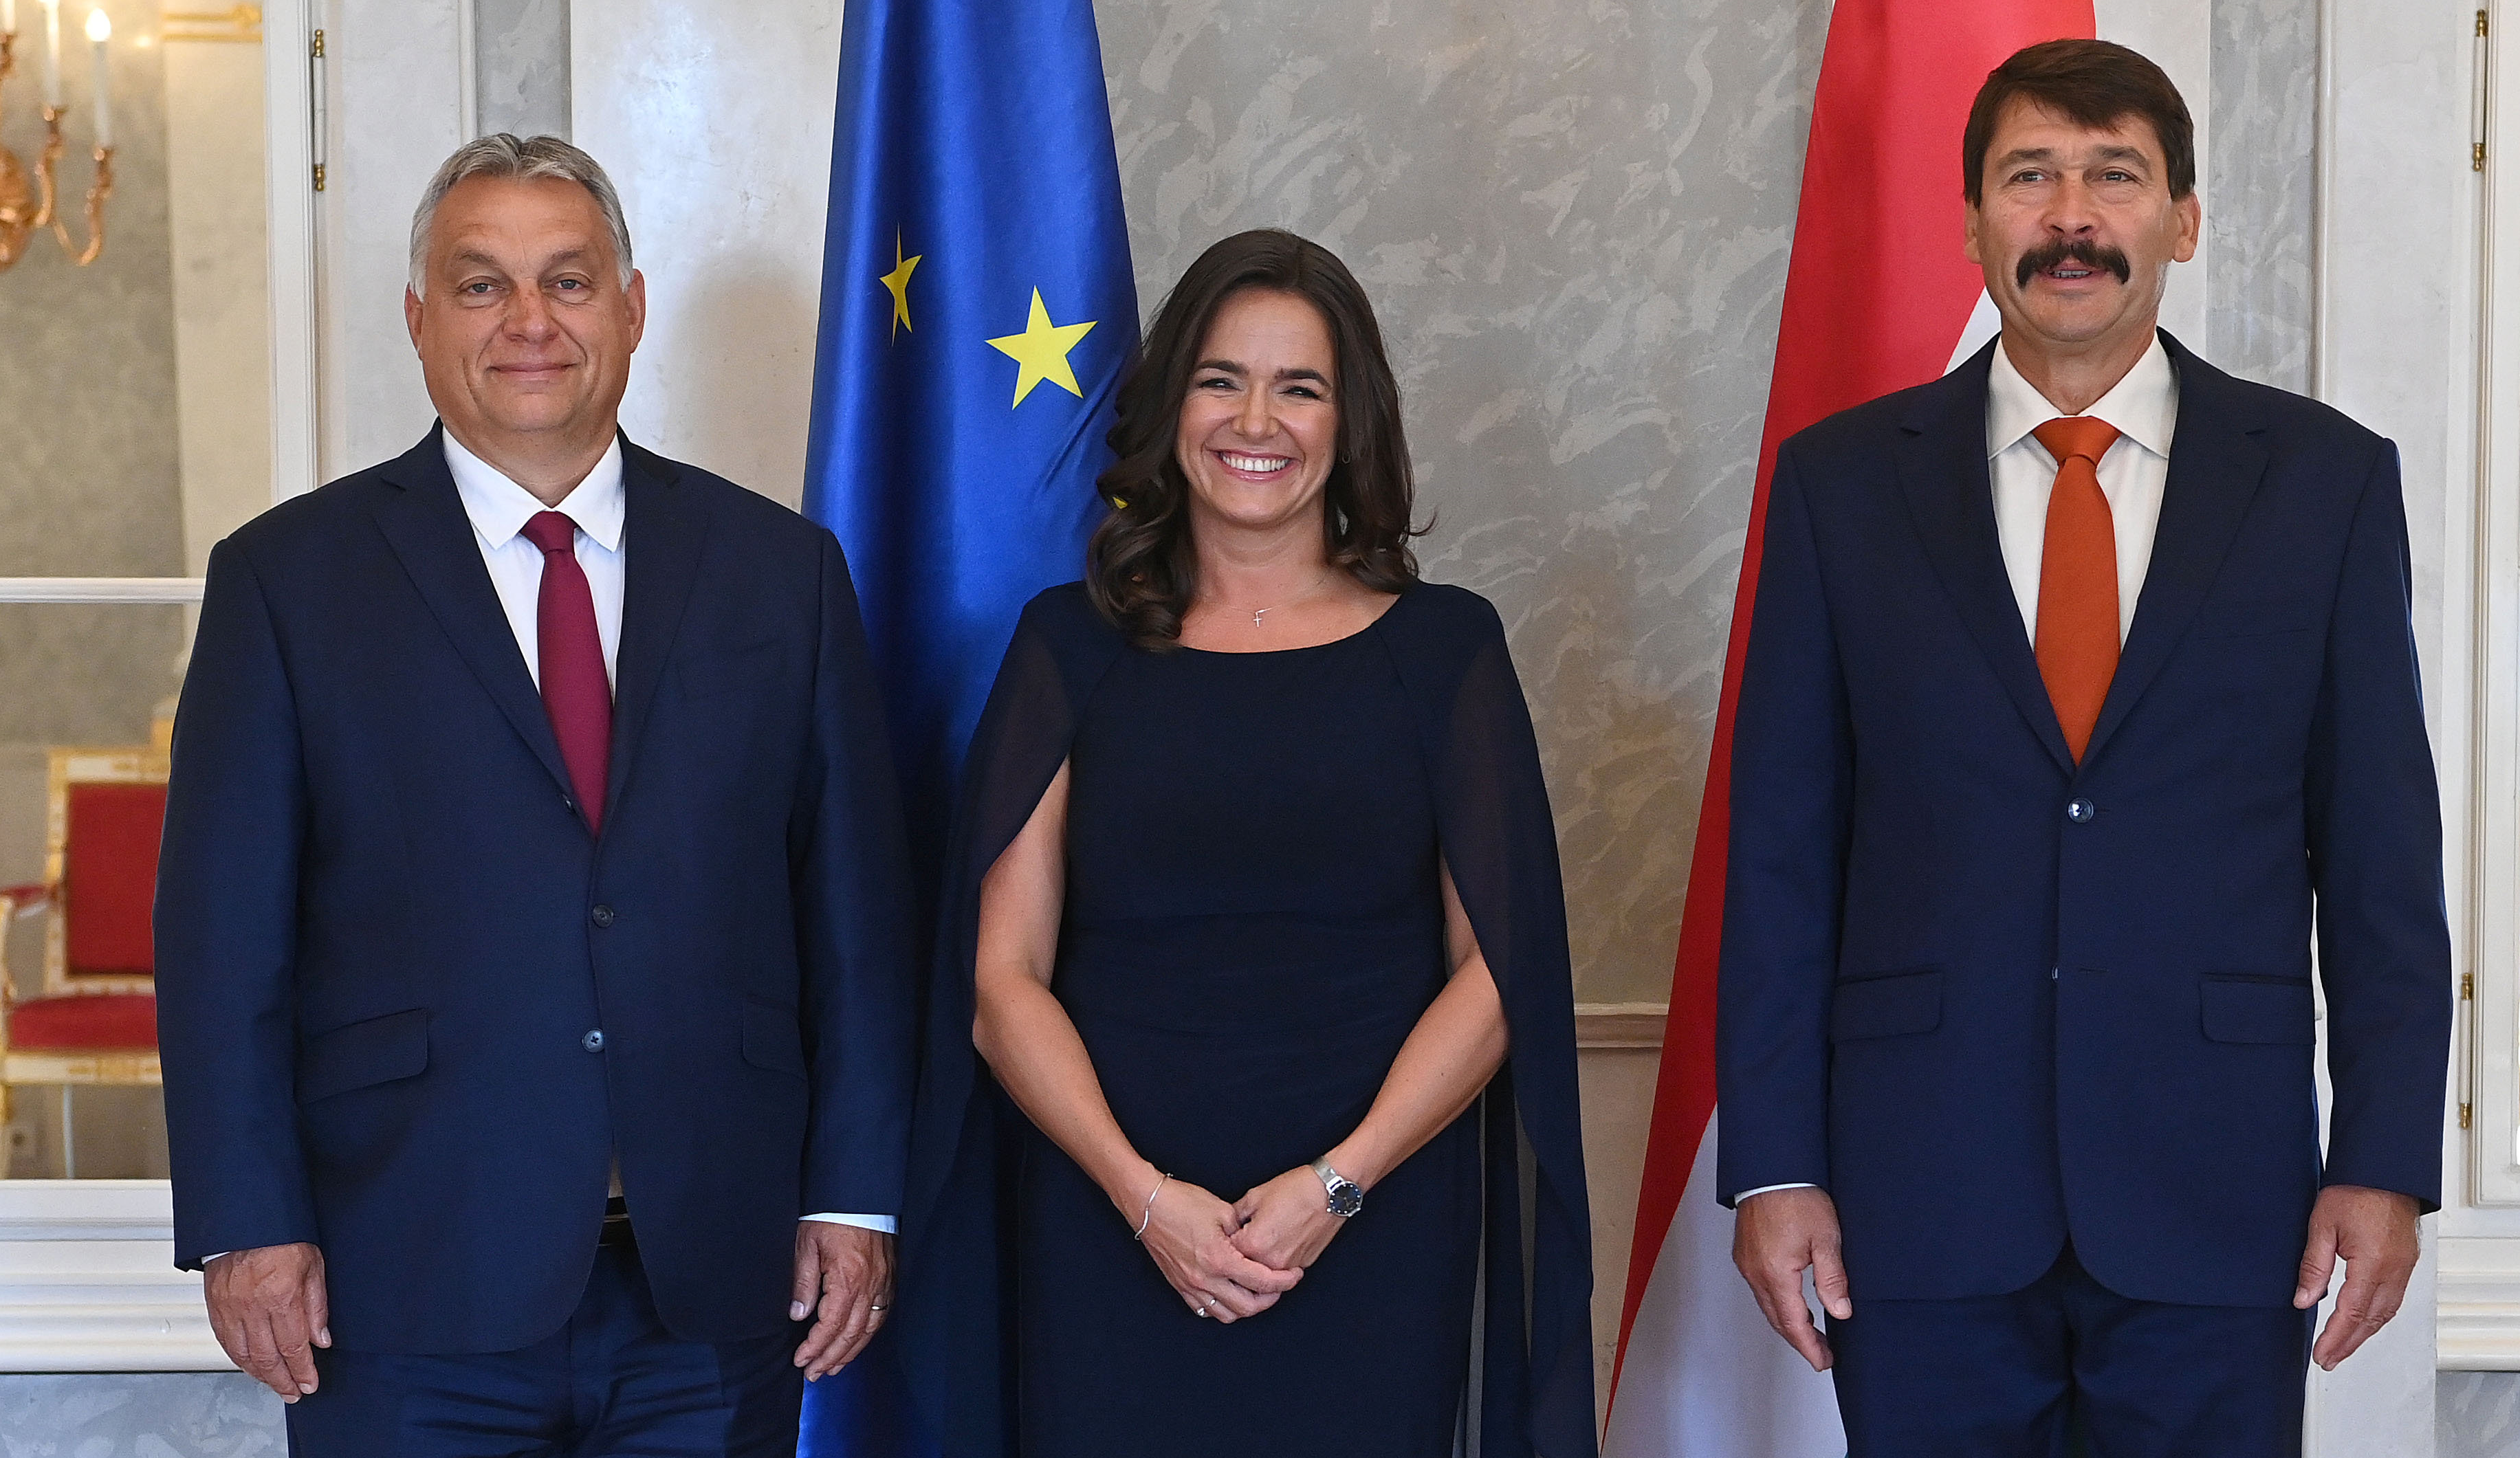 Fidesz to Nominate Family Minister Katalin Novák for President